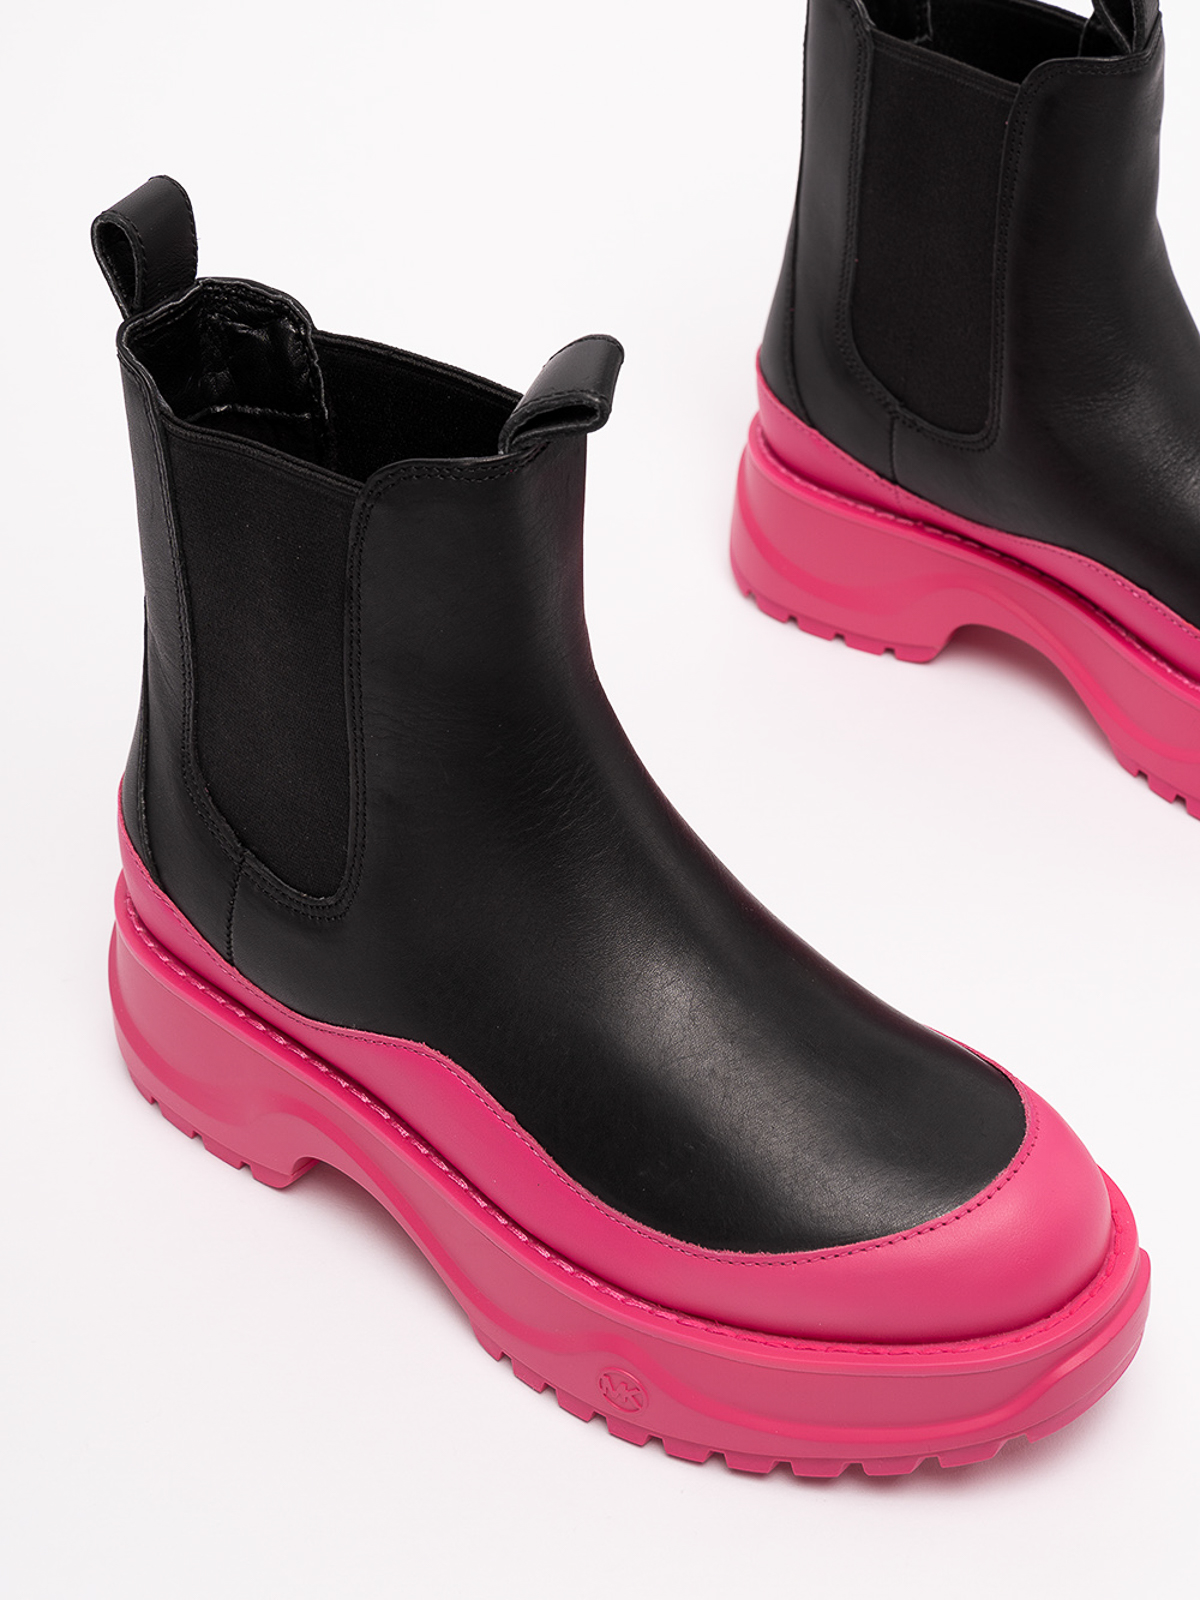 Shop Michael Kors Women's Rain Boots Boots